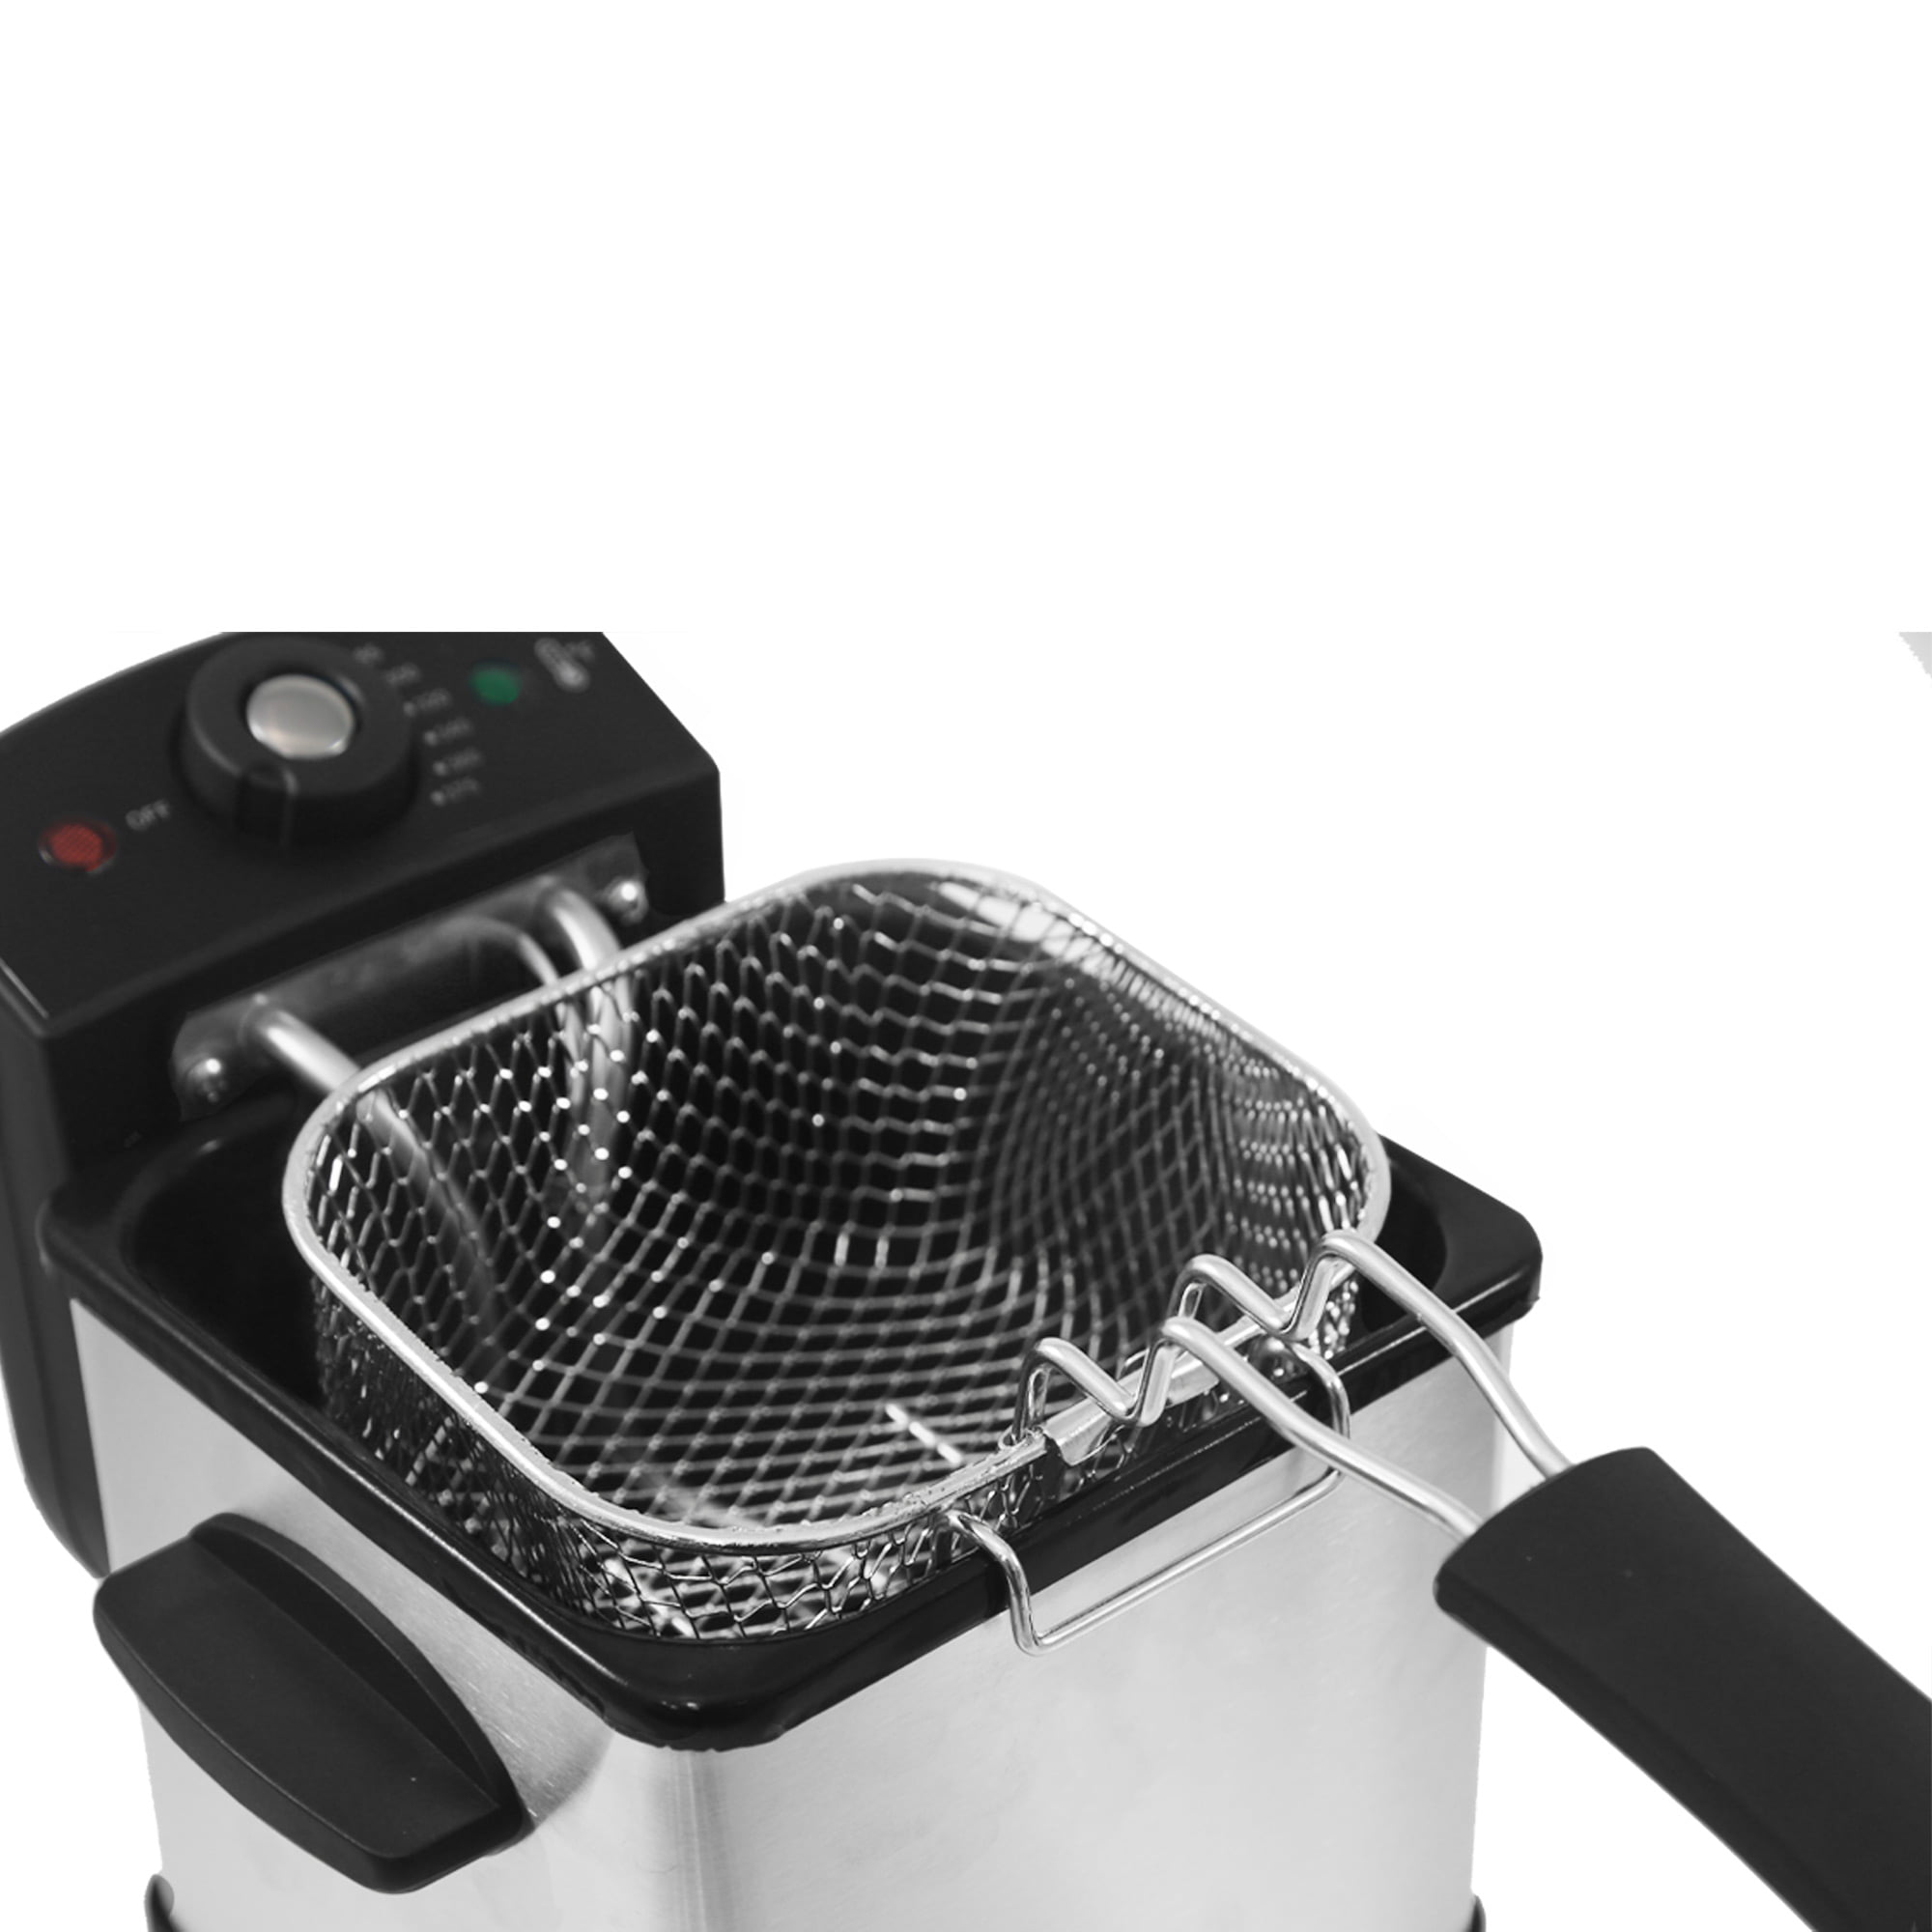 New Elite Gourmet Deep Fryer 1.5 Quart Cooker - appliances - by owner -  sale - craigslist